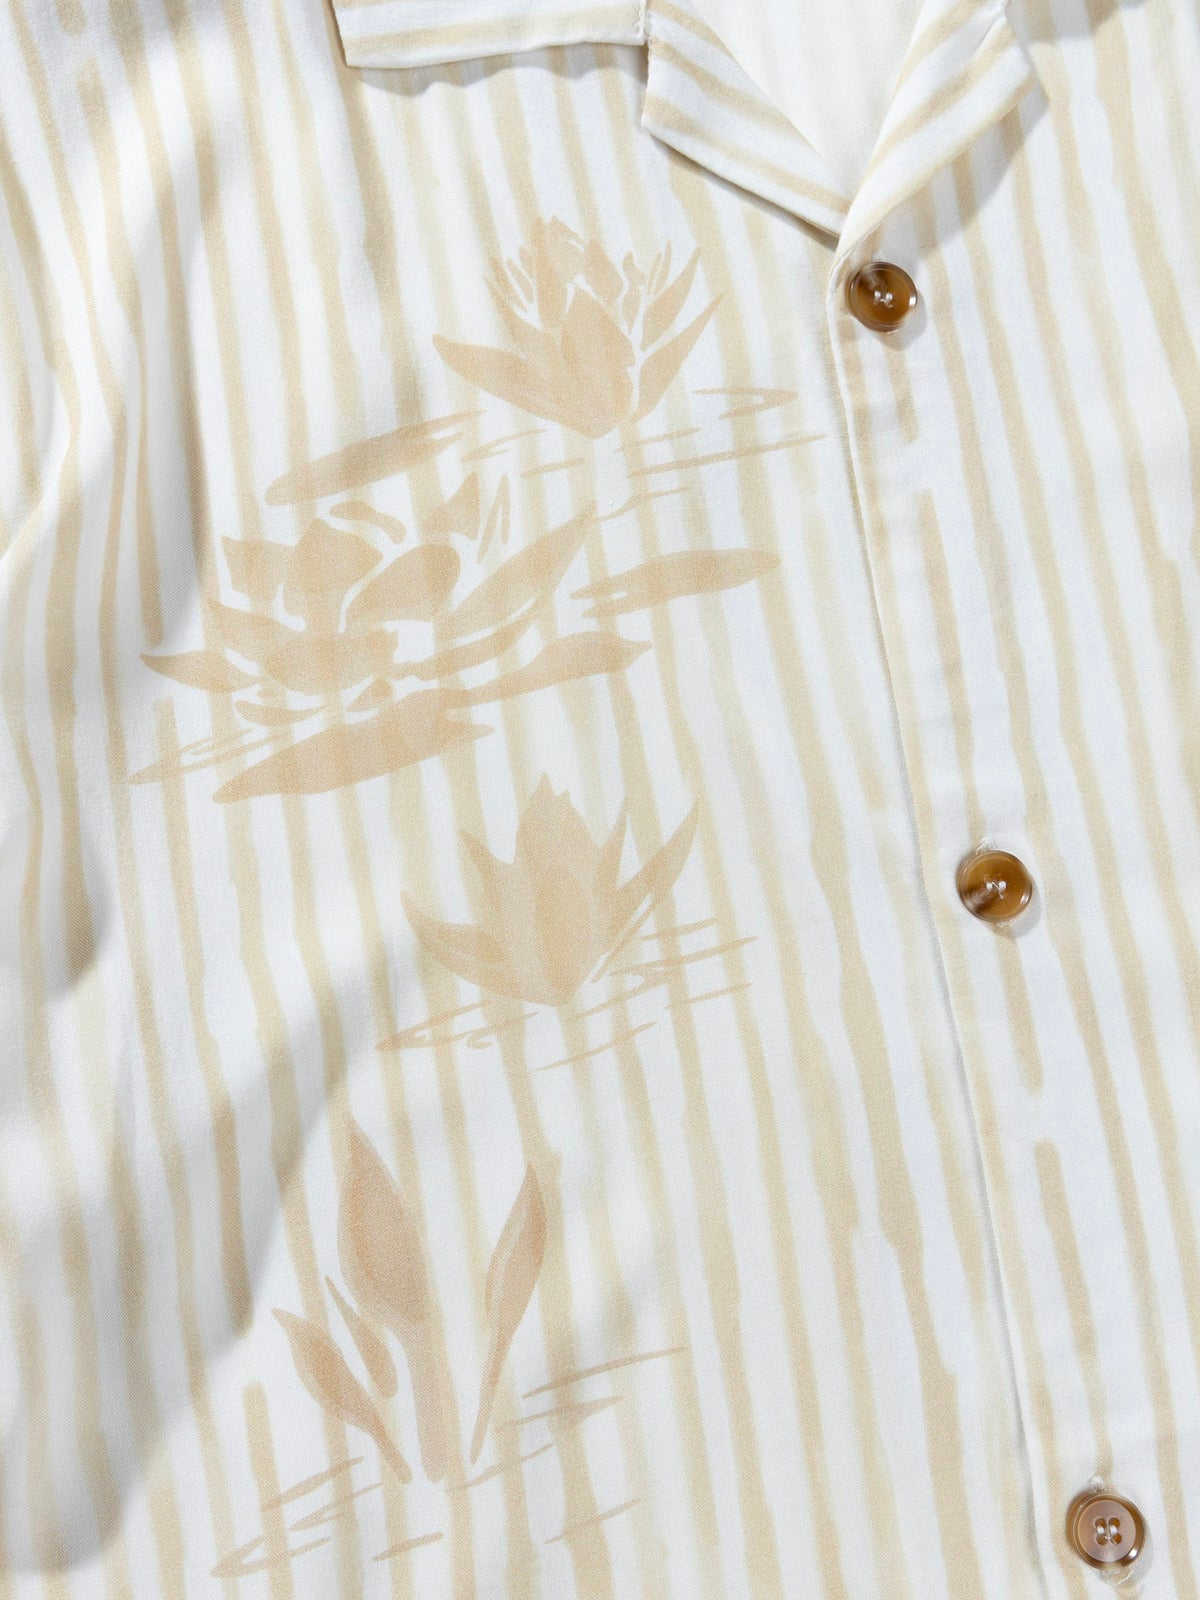 rhythm lily stripe cuban ss short sleeve shirt camel white cream floral stripe print rayon kempt athens ga georgia men's clothing store